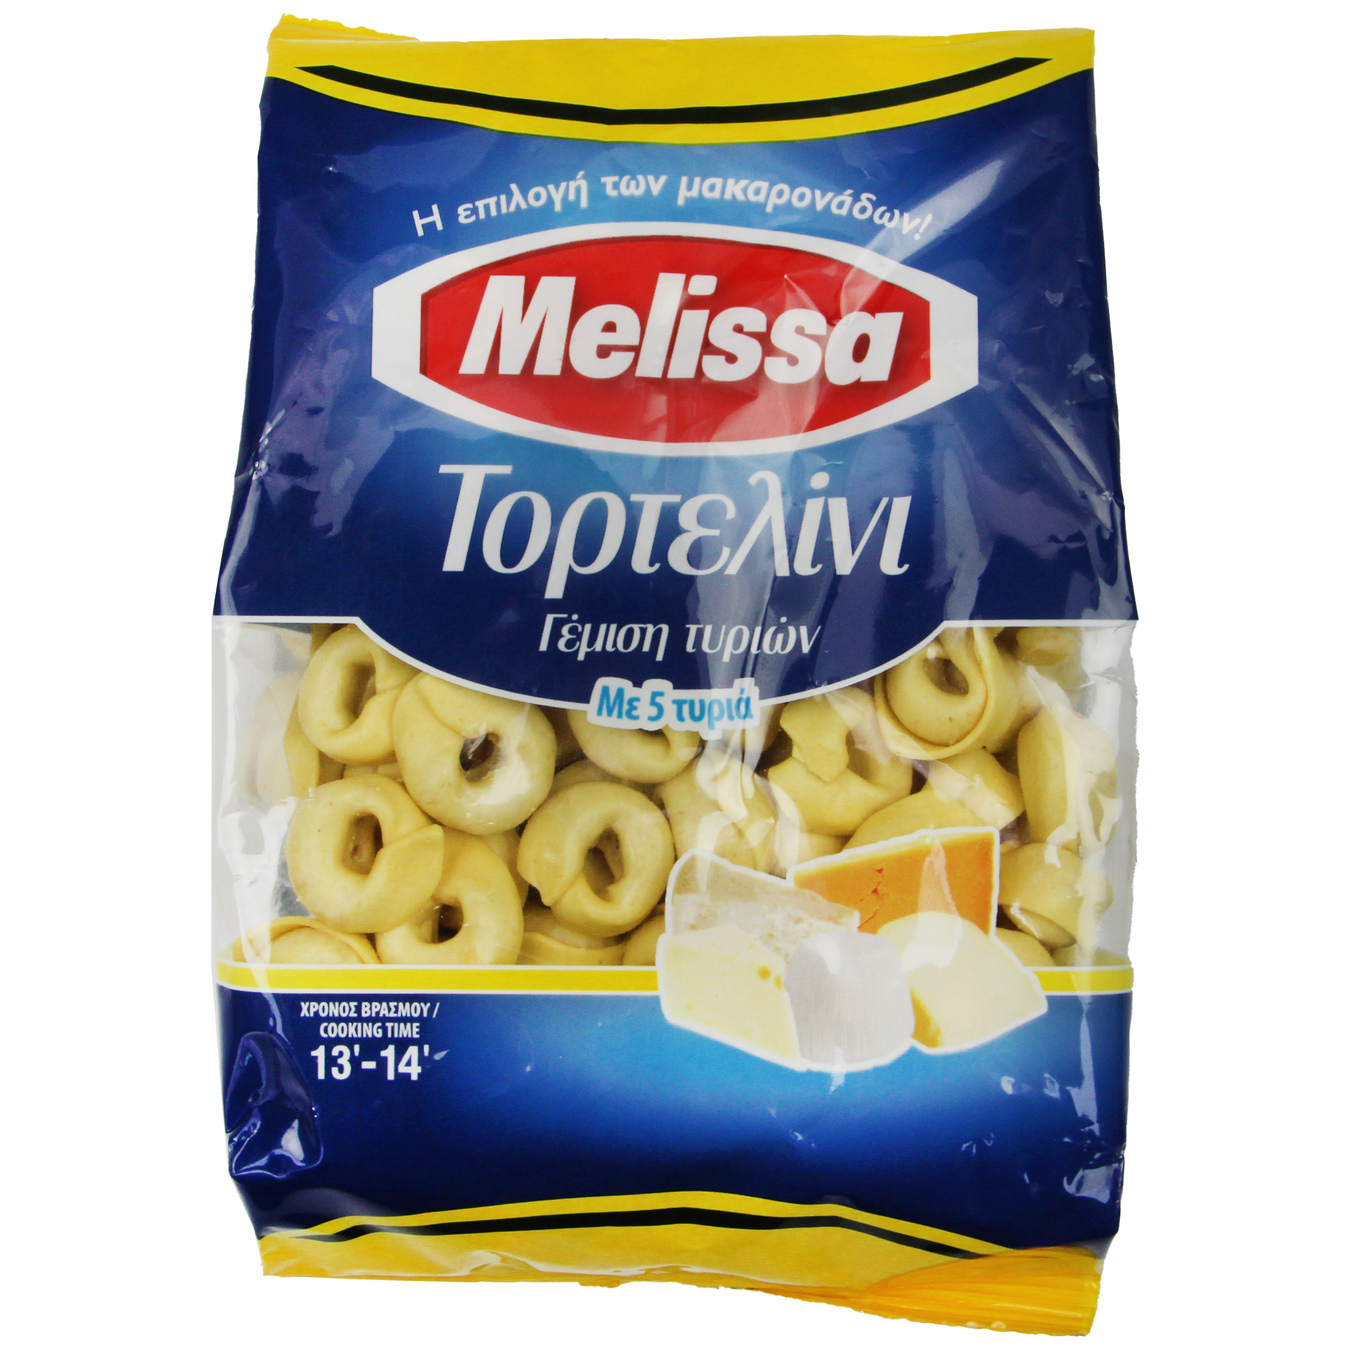 Melissa Tortellini 5 Cheeses Egg Pasta 250g